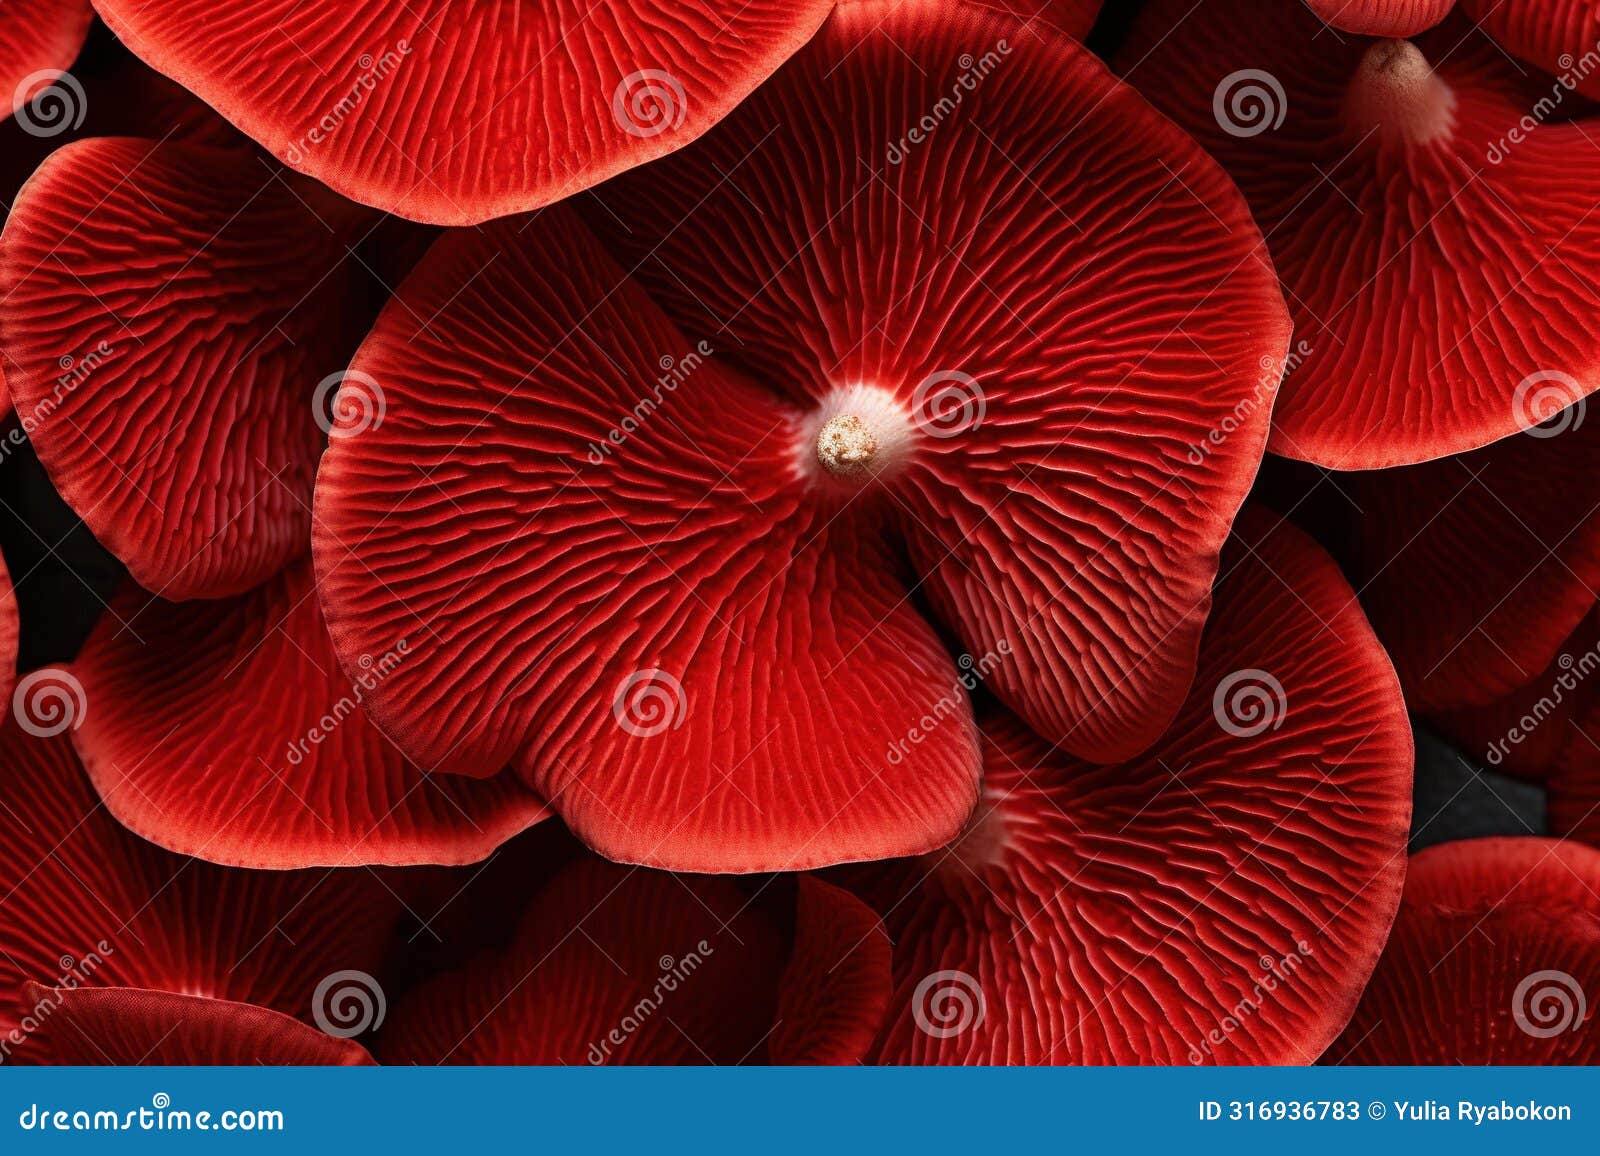 distinctive red mushroom pattern. generate ai